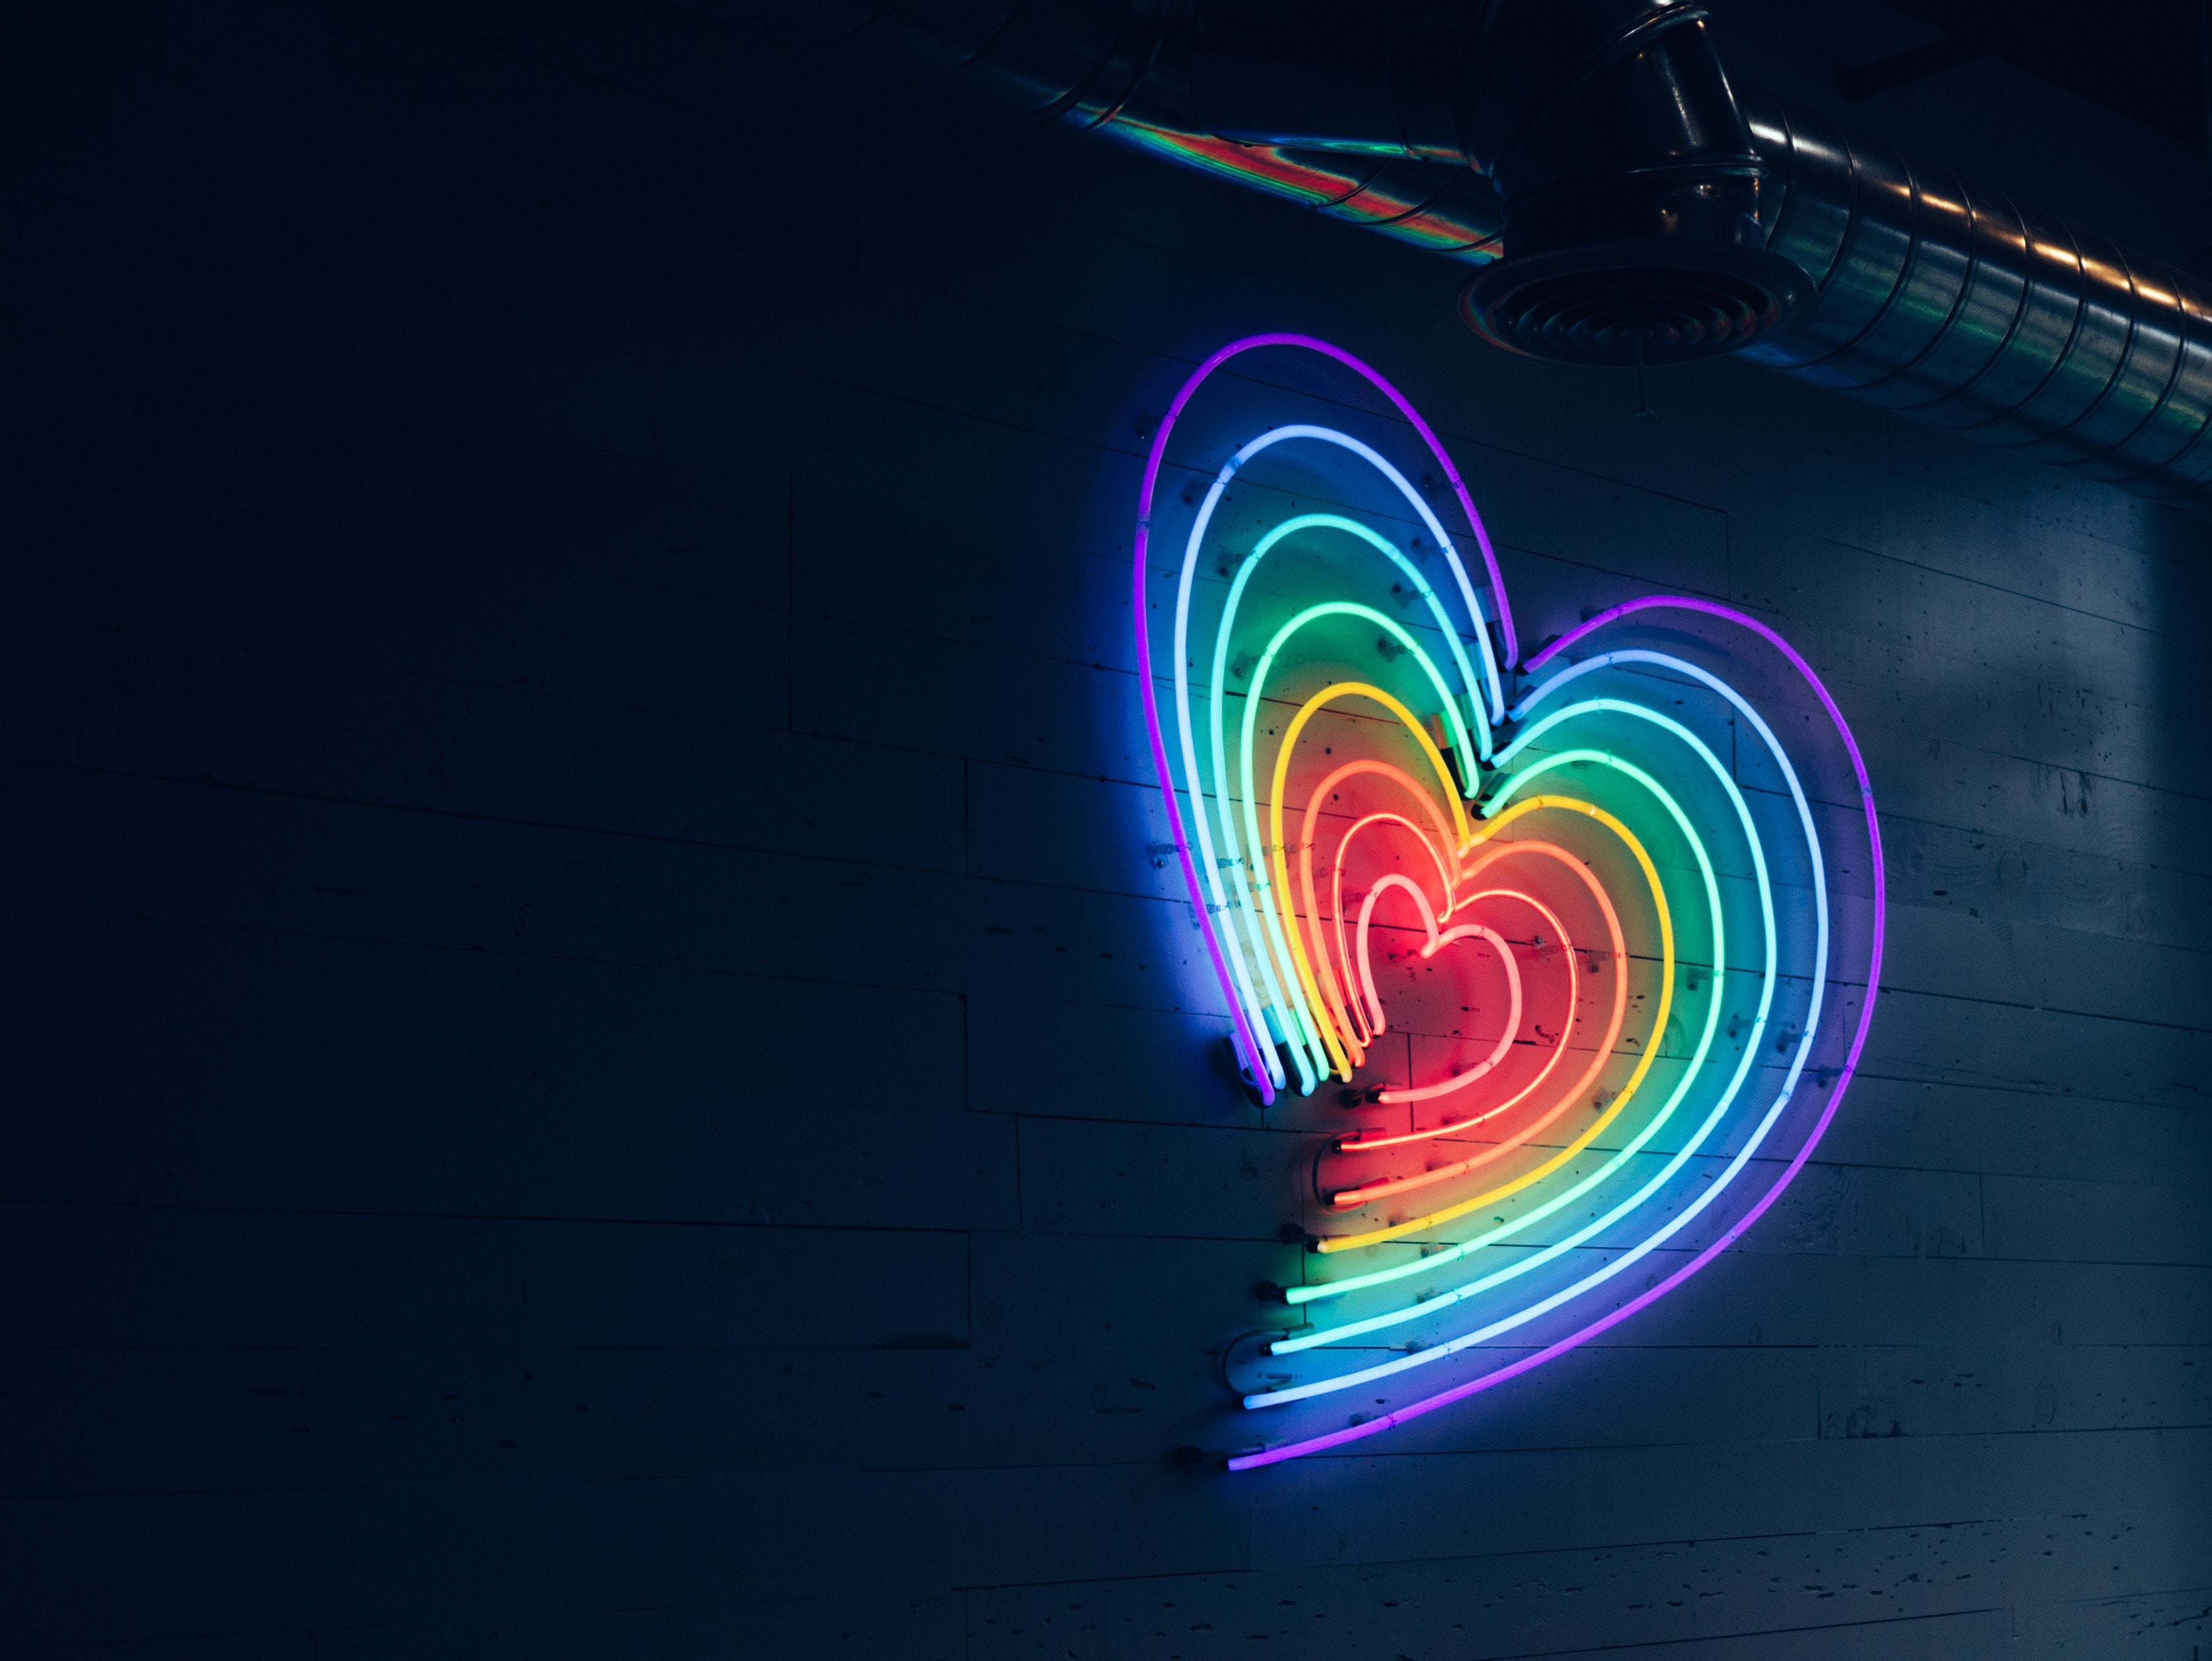 Photo of neon lights in a heart shape 